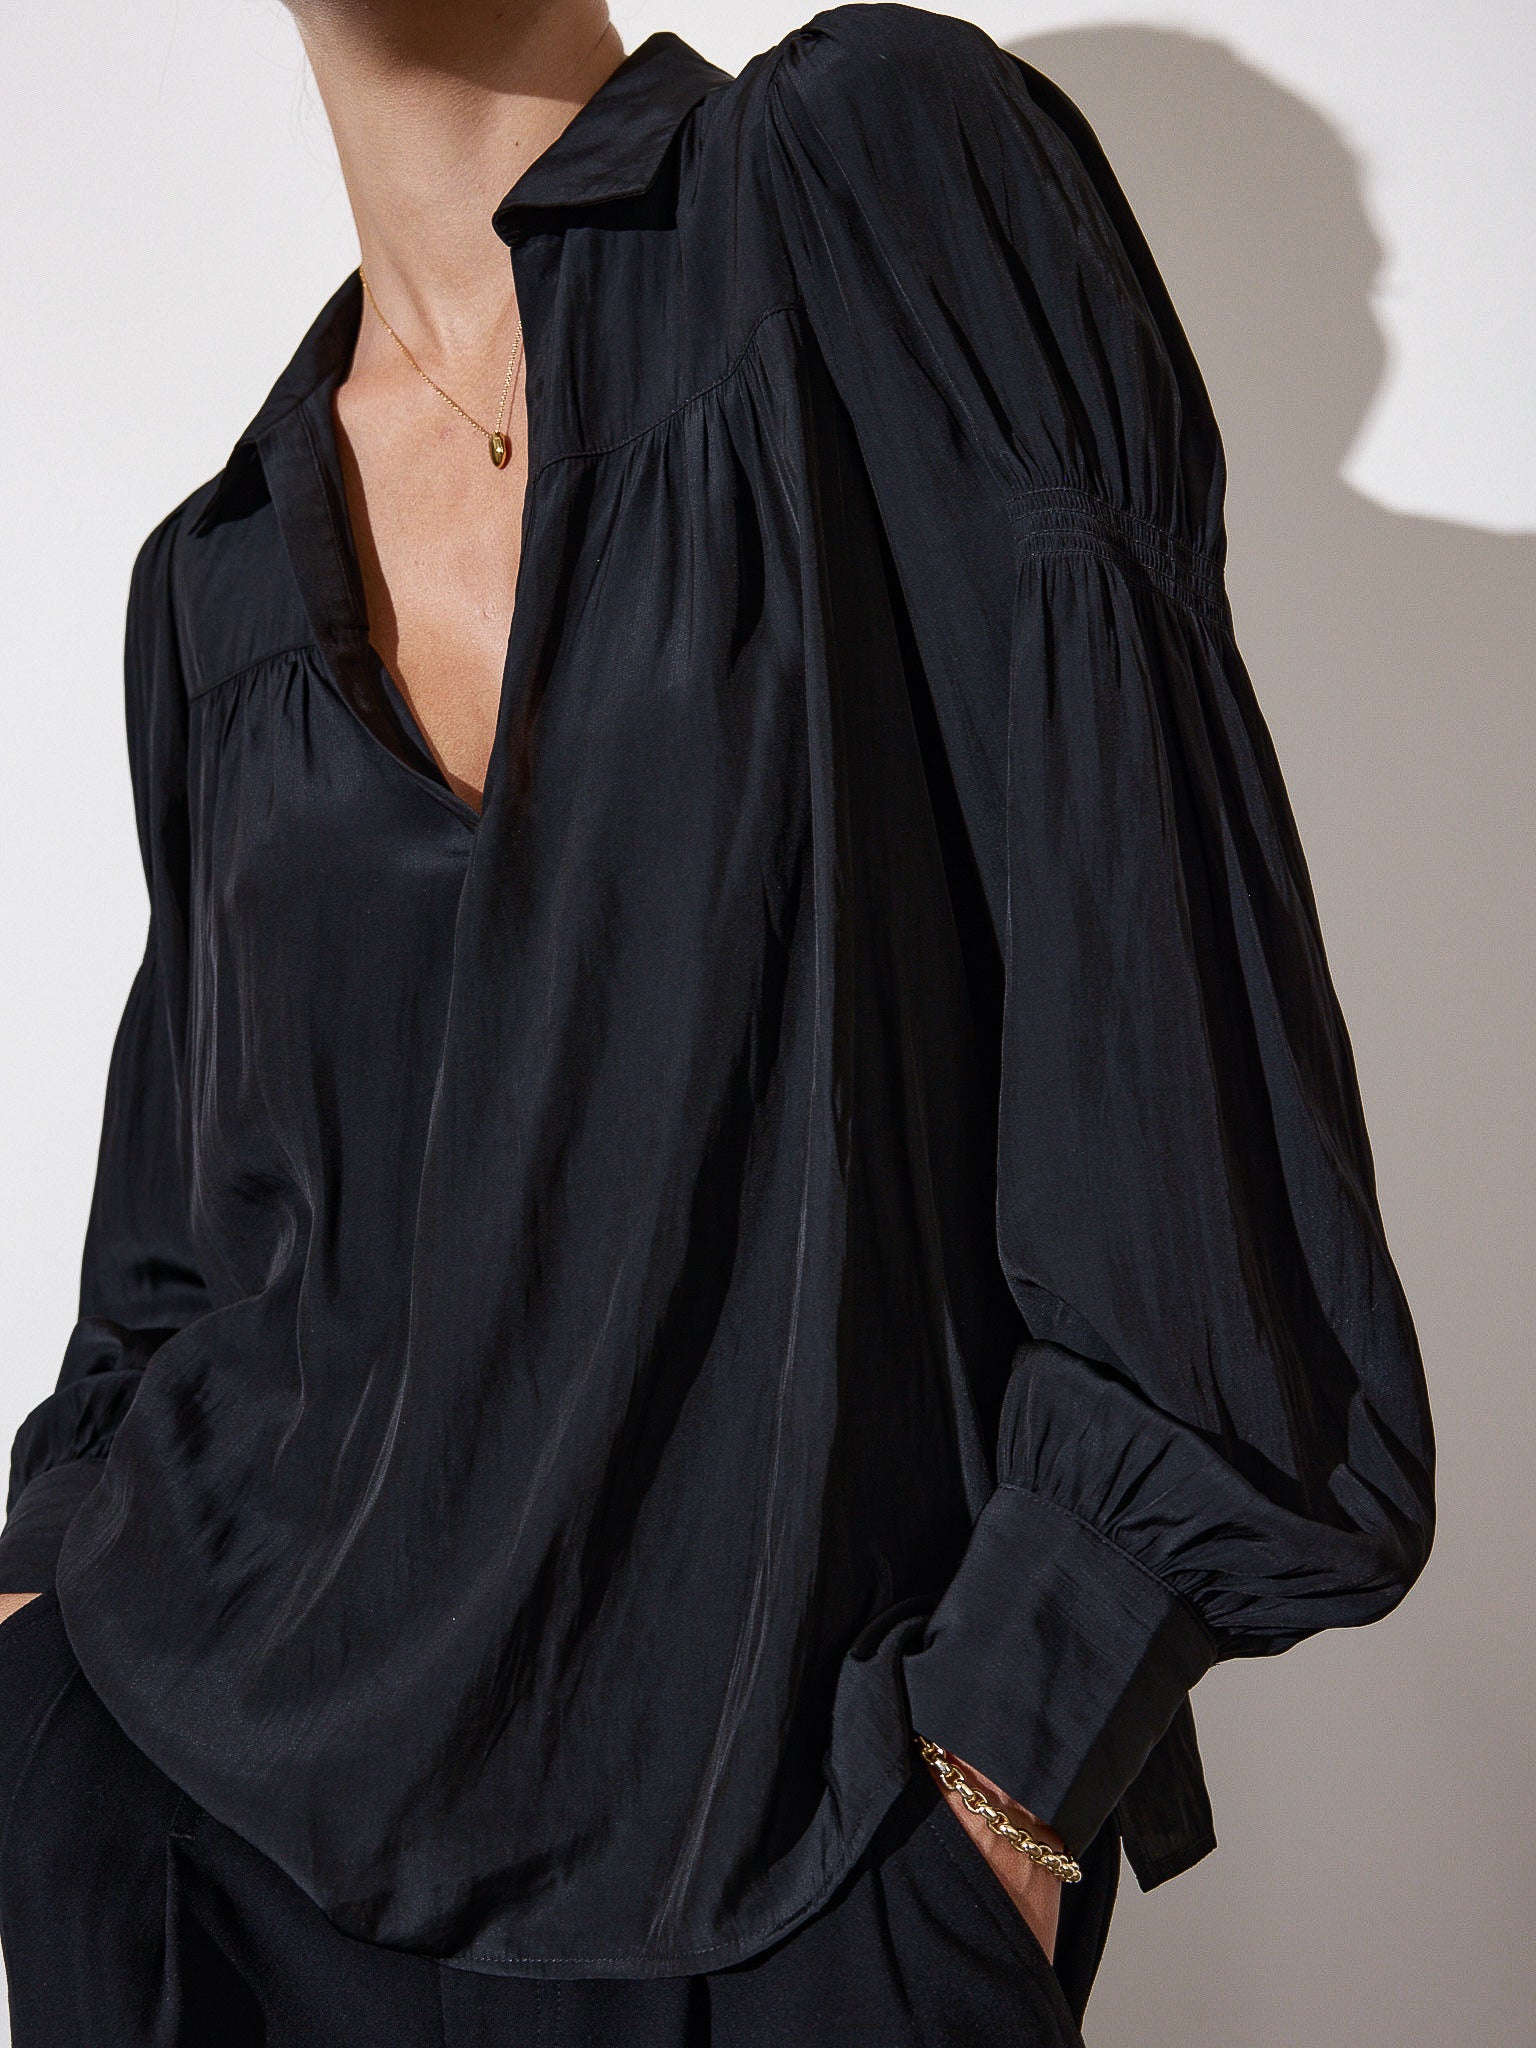 Anson black v-neck blouse side view